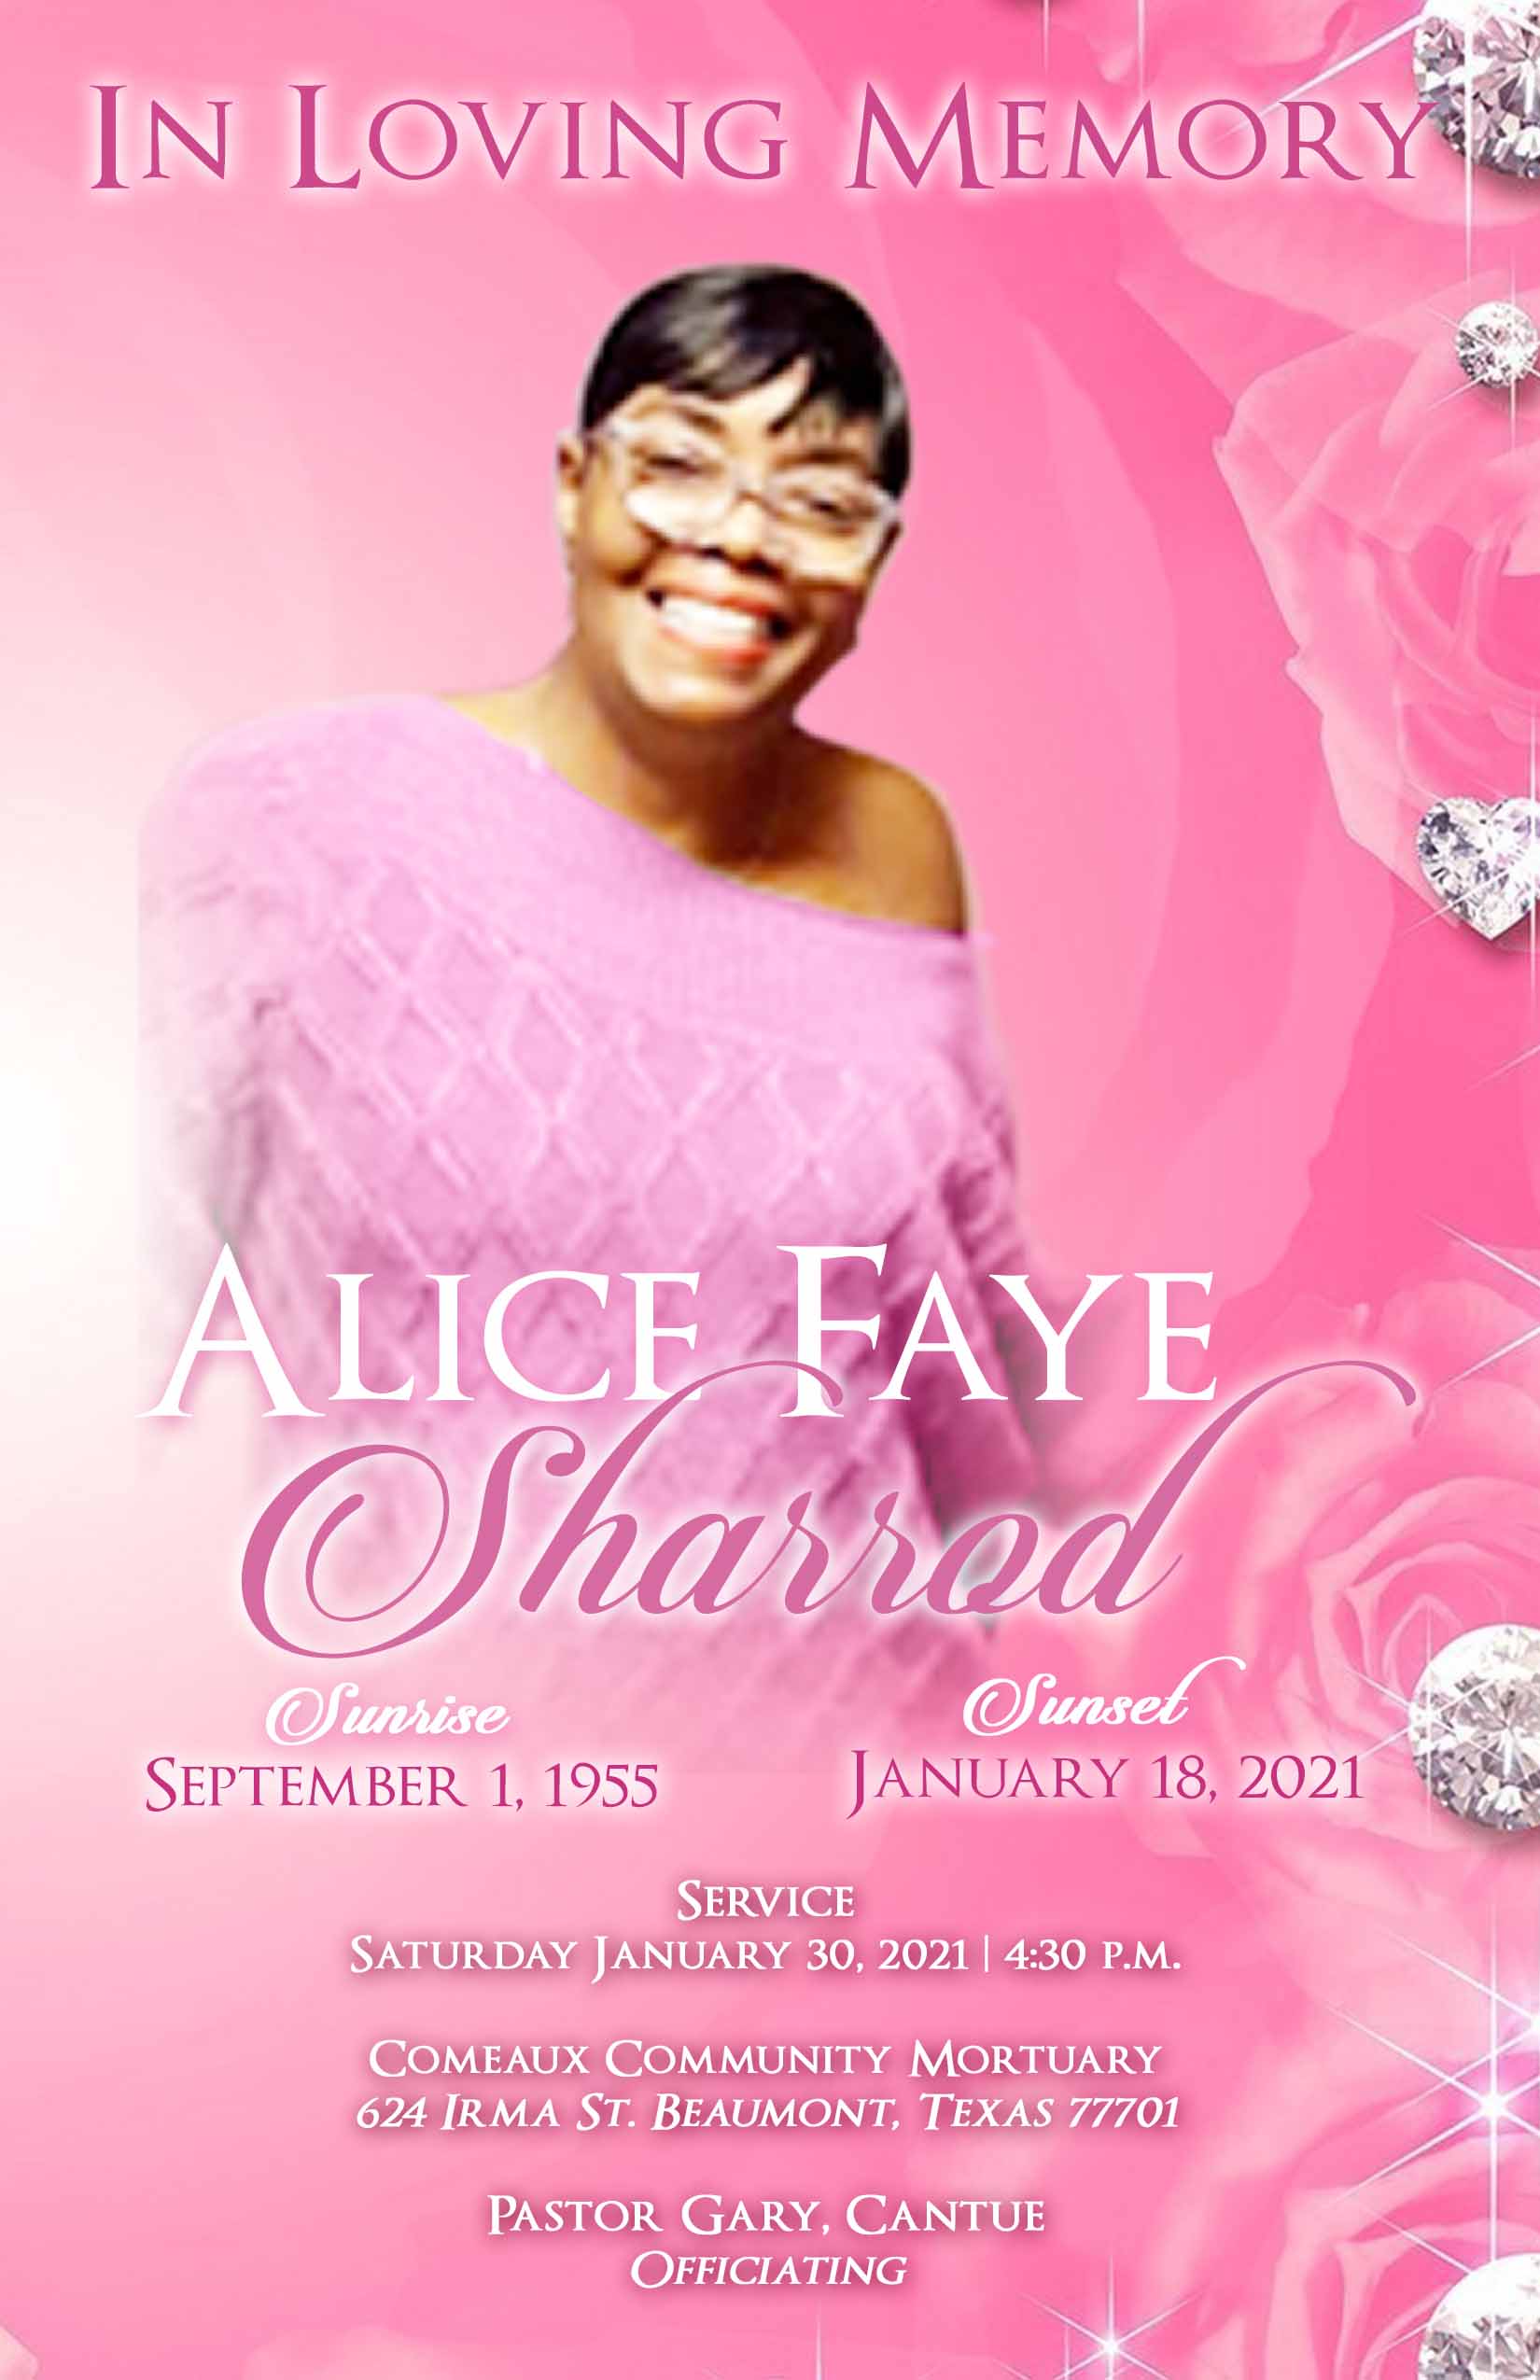 Alice Faye Sharrod 1955-2021